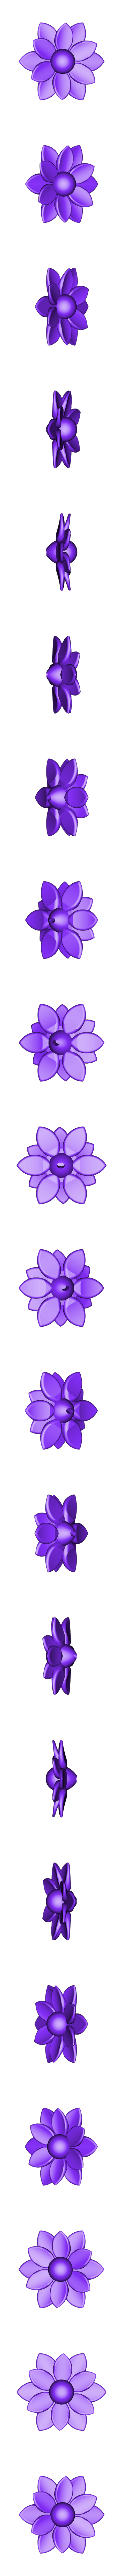 flower.stl Download free STL file Flower • 3D printer template, Hex17